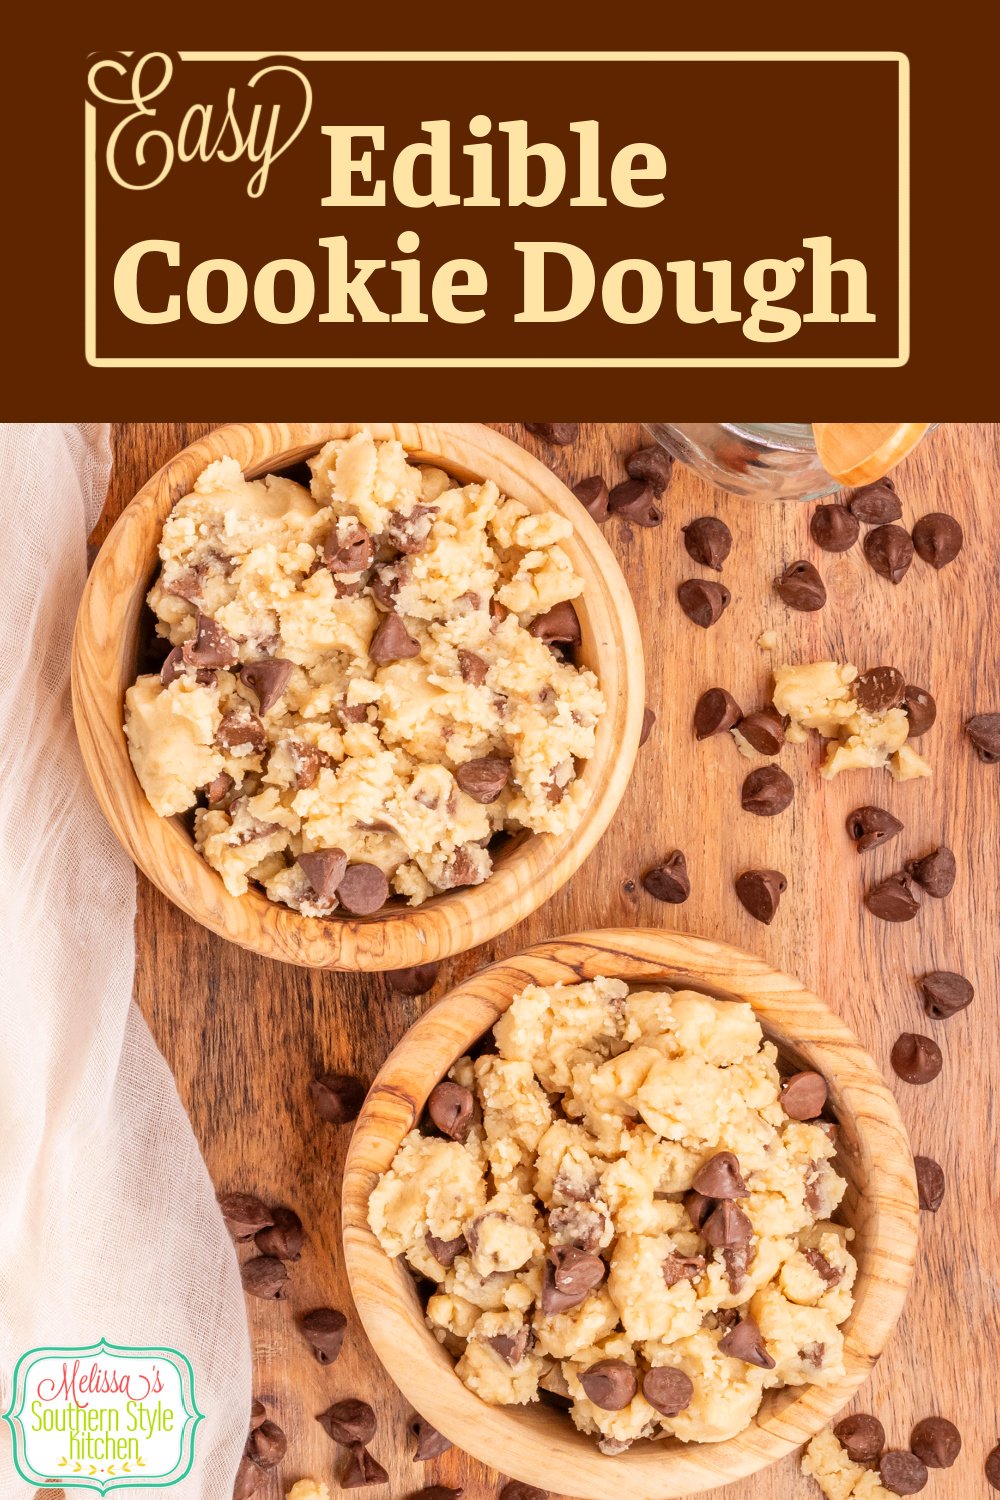 Kids of all ages will scramble to indulge in this Edible Cookie Dough! #cookies #edibleookiedough #cookierecipes #chocolatechipcookies #edibledough #heattreatflour #howtoheattreatflour #easycookiedoughrecipe via @melissasssk